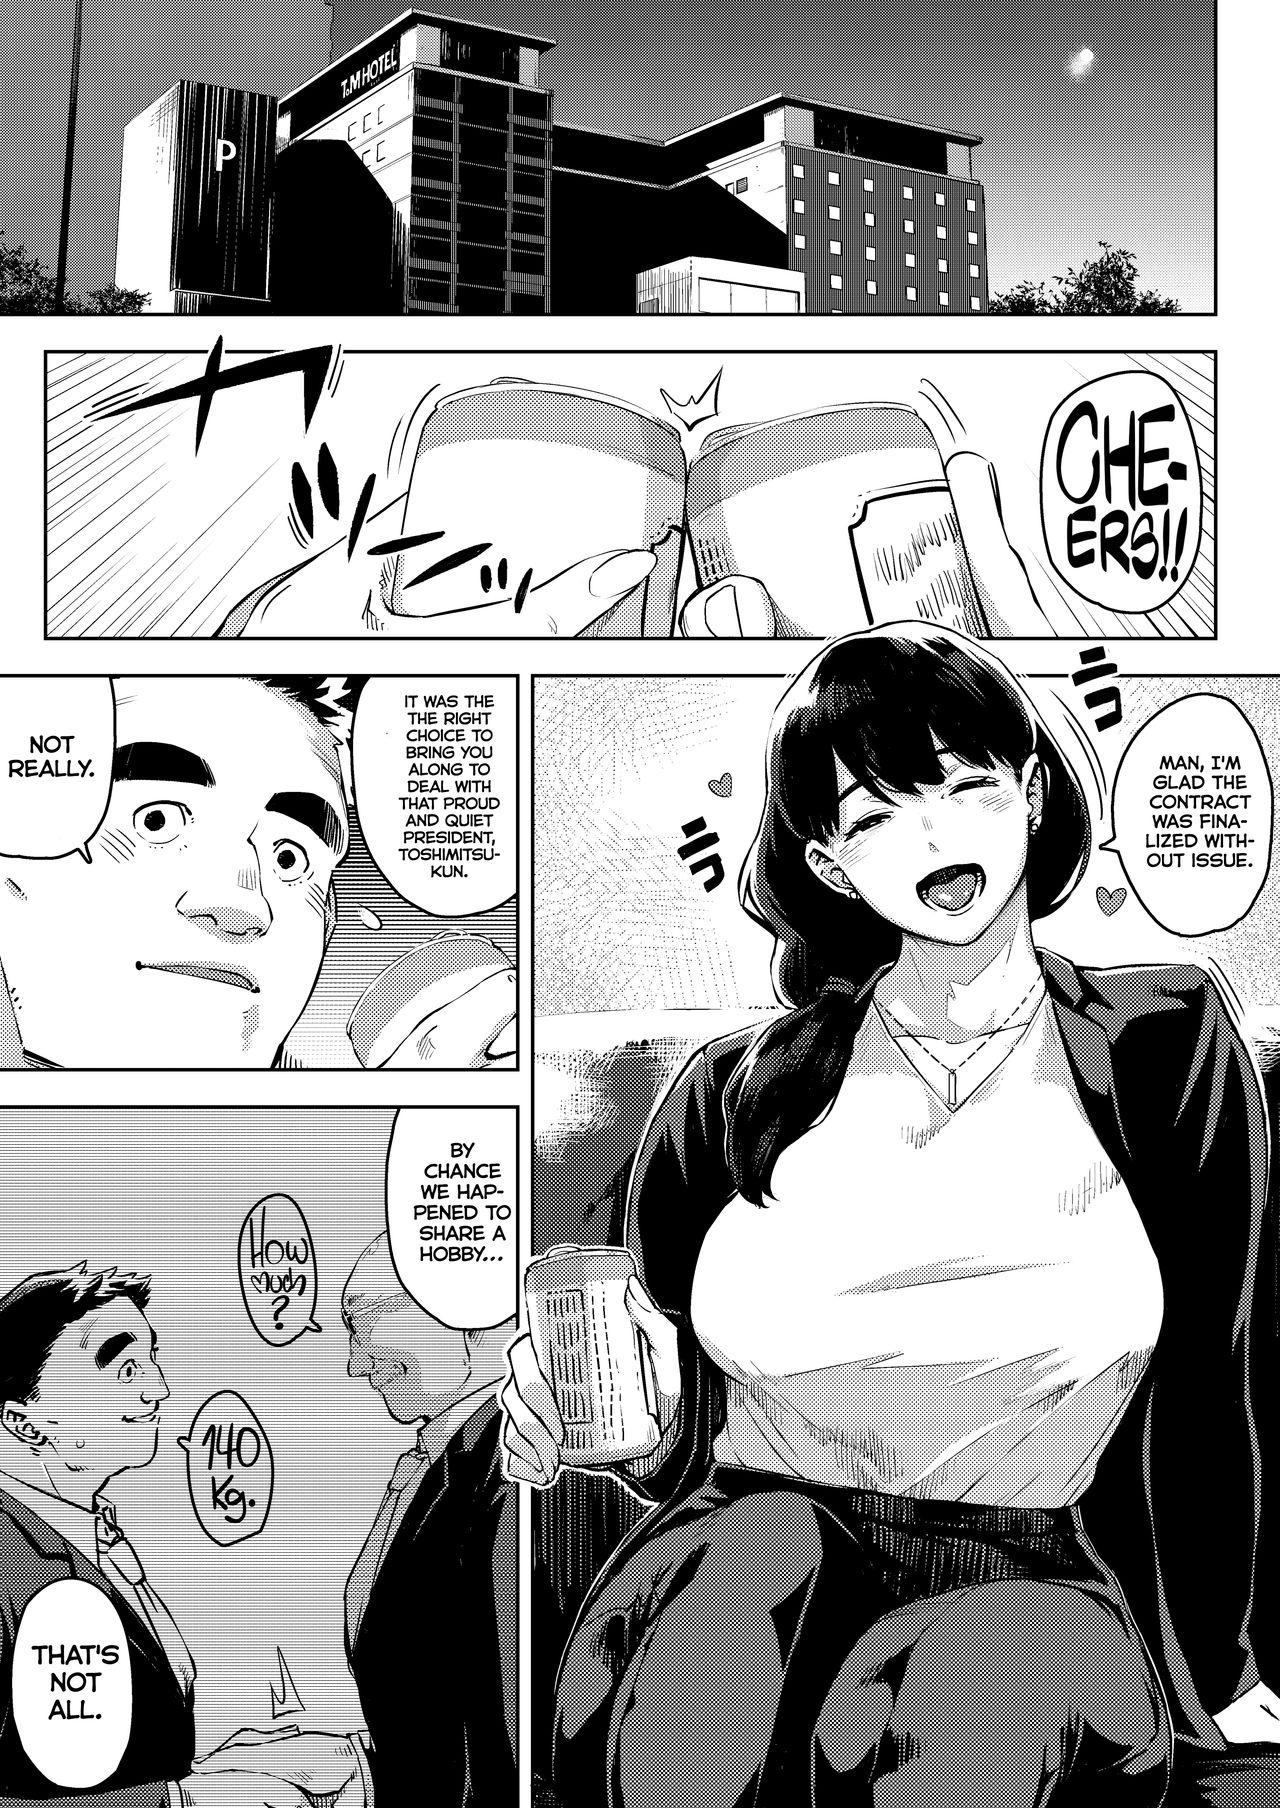 Married Boss Yumiko Having Sex With Her Subordinate Rocket Monkey - 1 